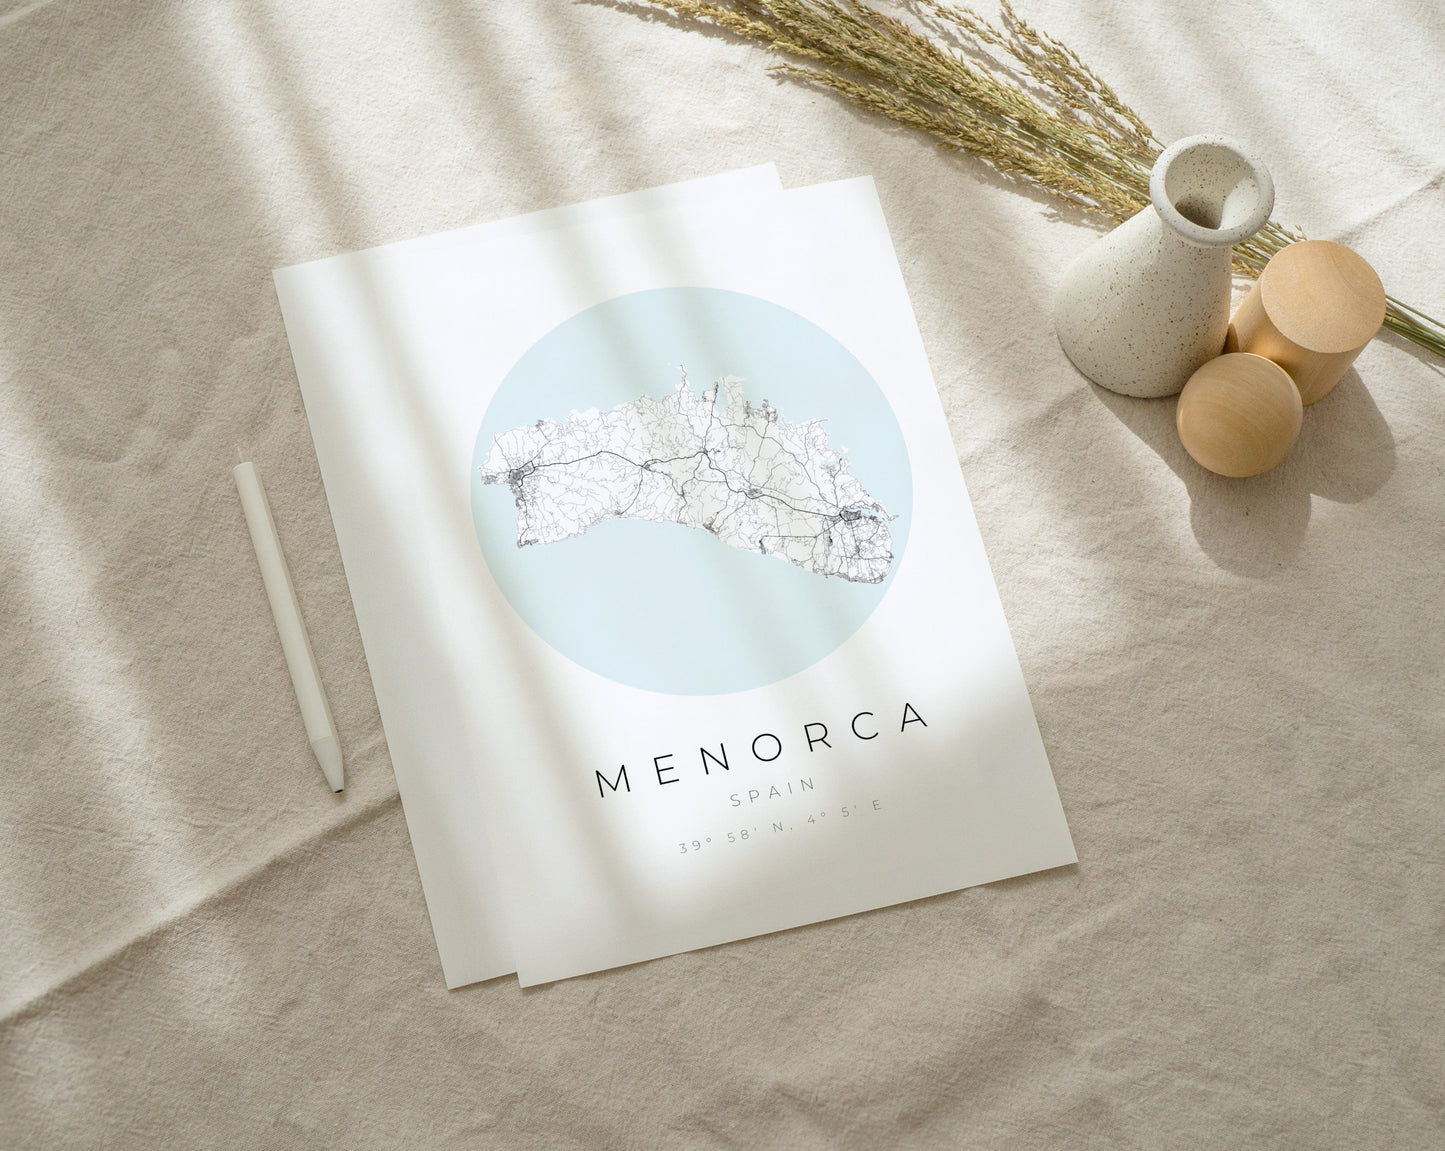 Menorca Poster | Karte kreisförmig